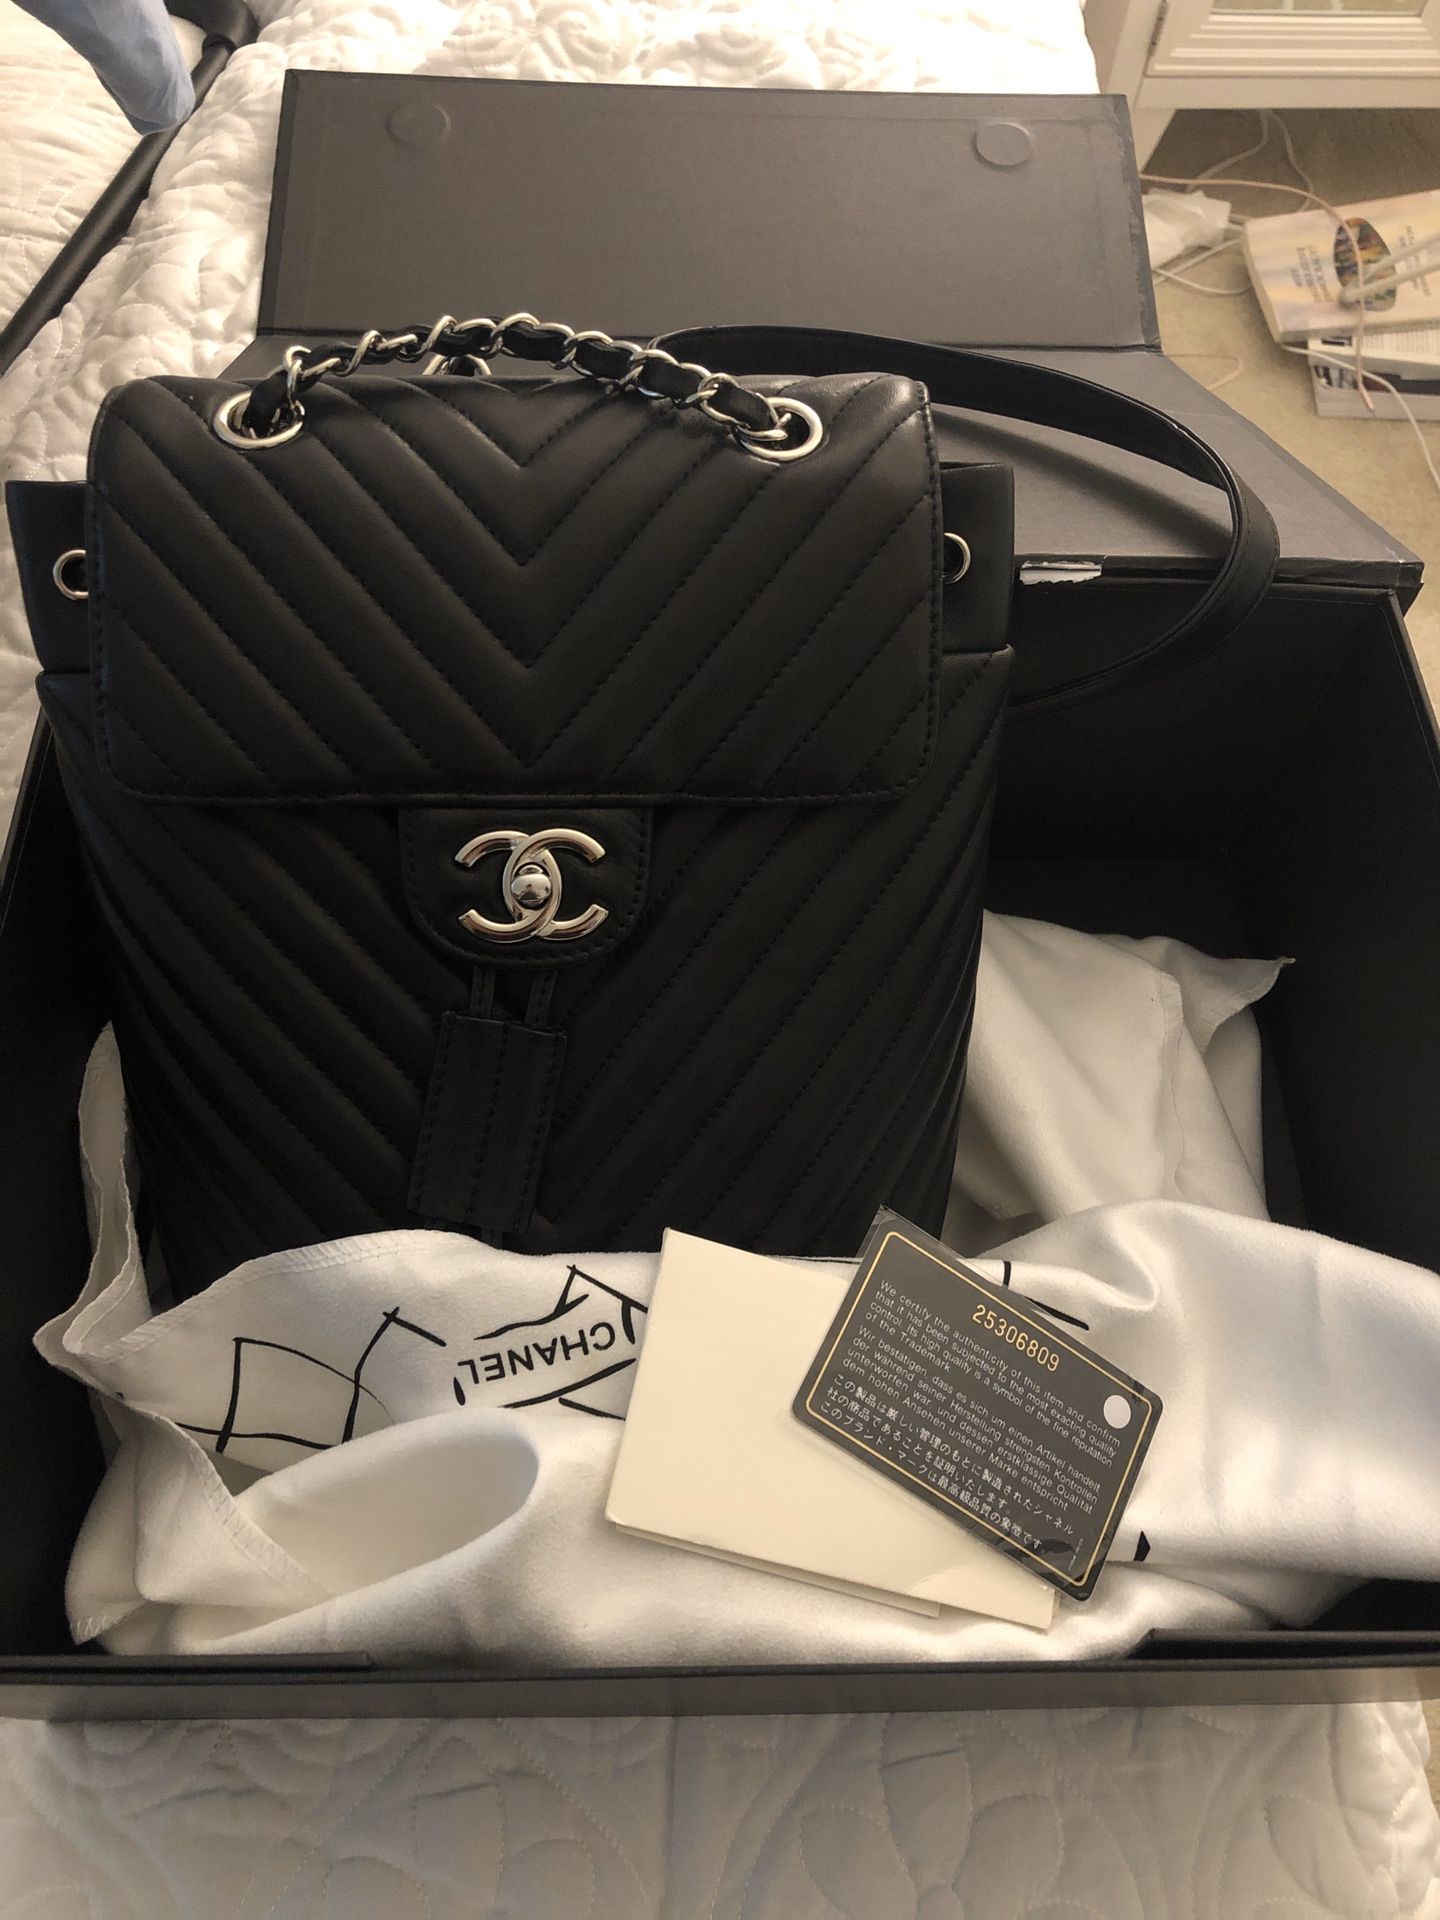 Chevron Chanel backpack